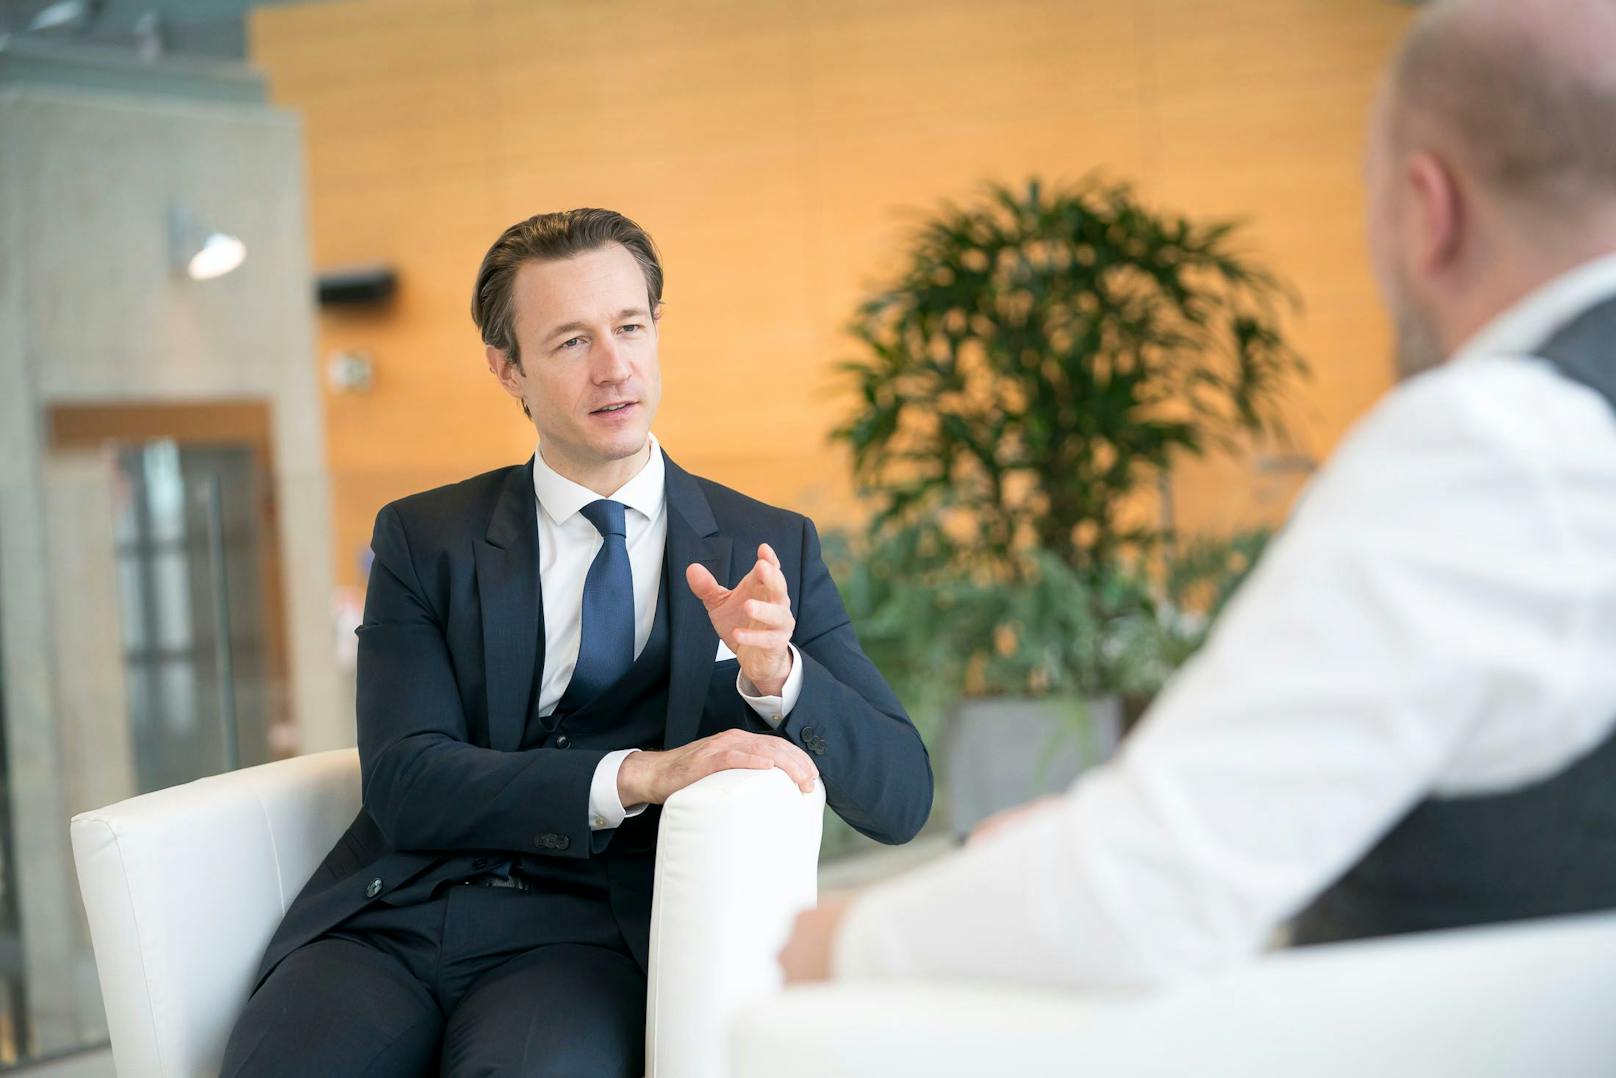 ÖVP-Wien-Chef und Finanzminister Gernot Blümel im <em>"Heute"</em>-Interview